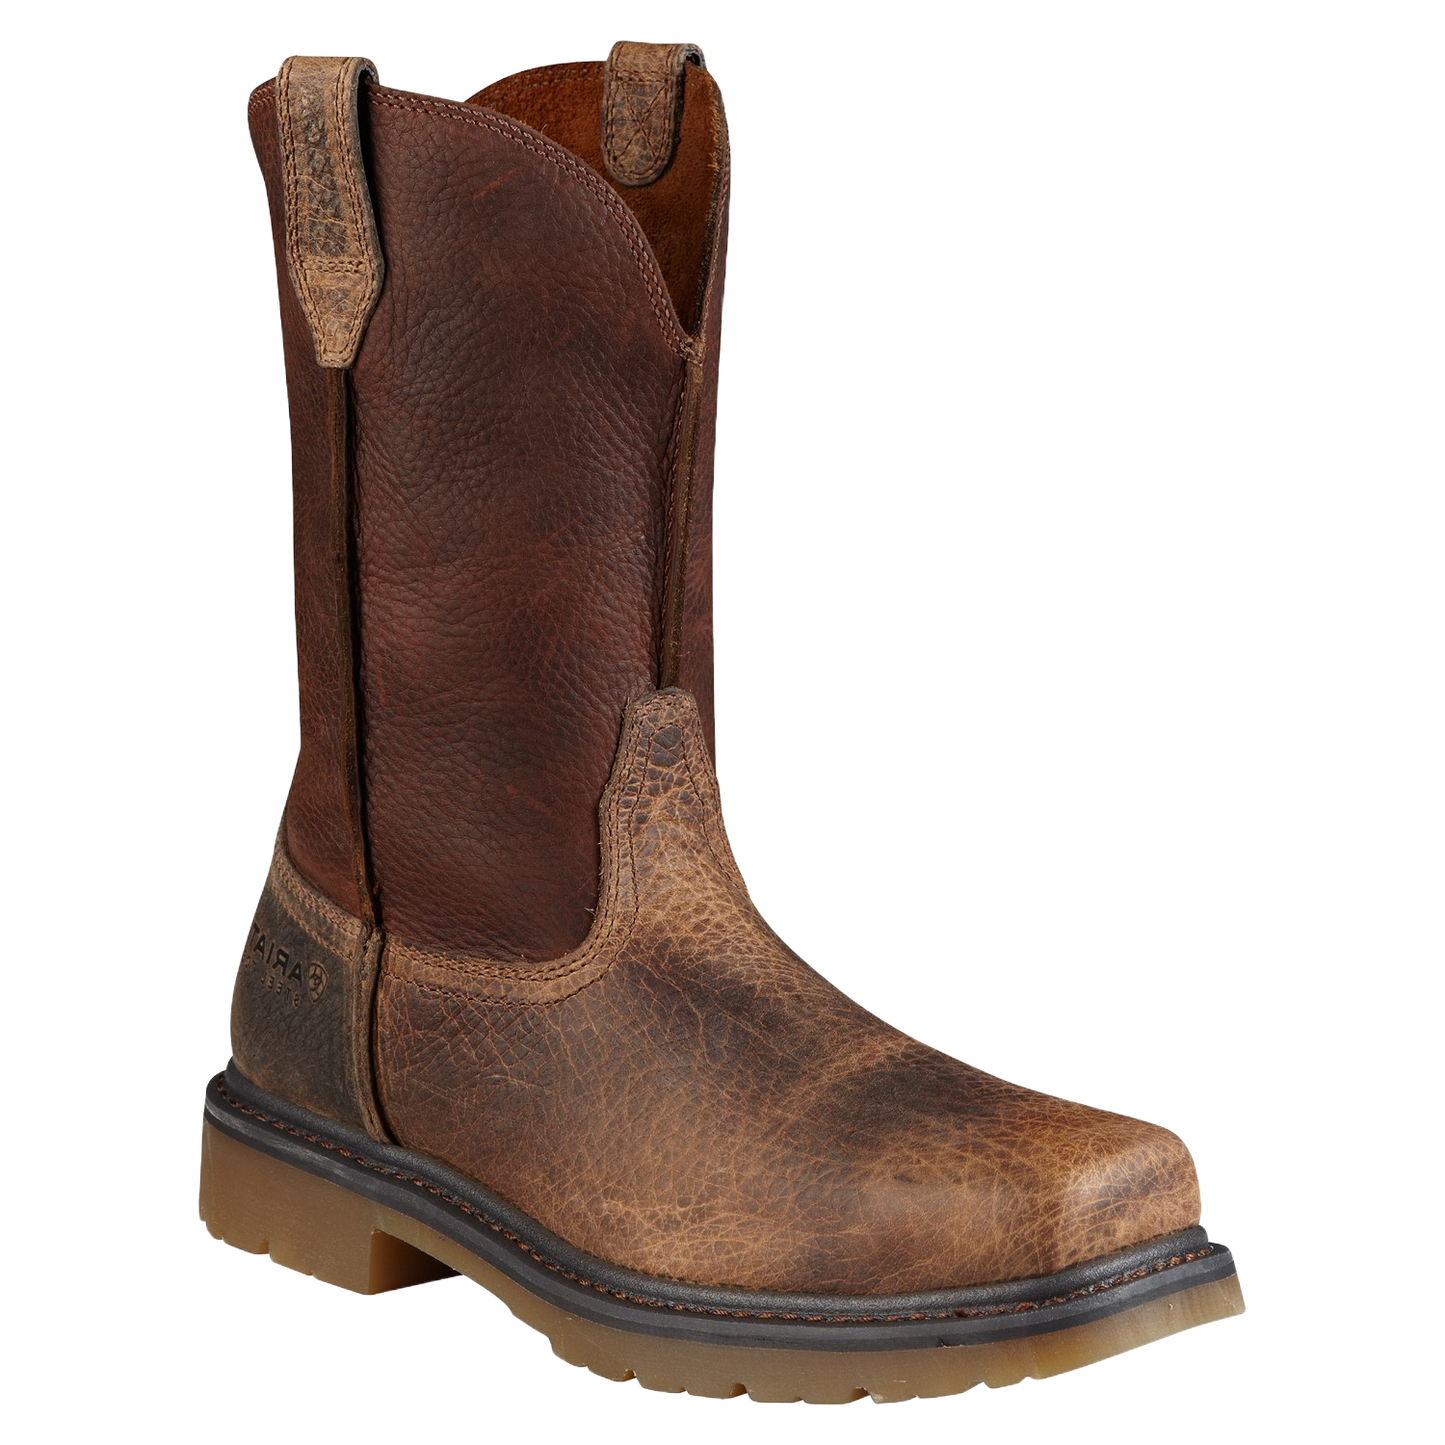 Ariat® Men's Rambler Work Steel Square Toe Earth Brown Boots 10008642